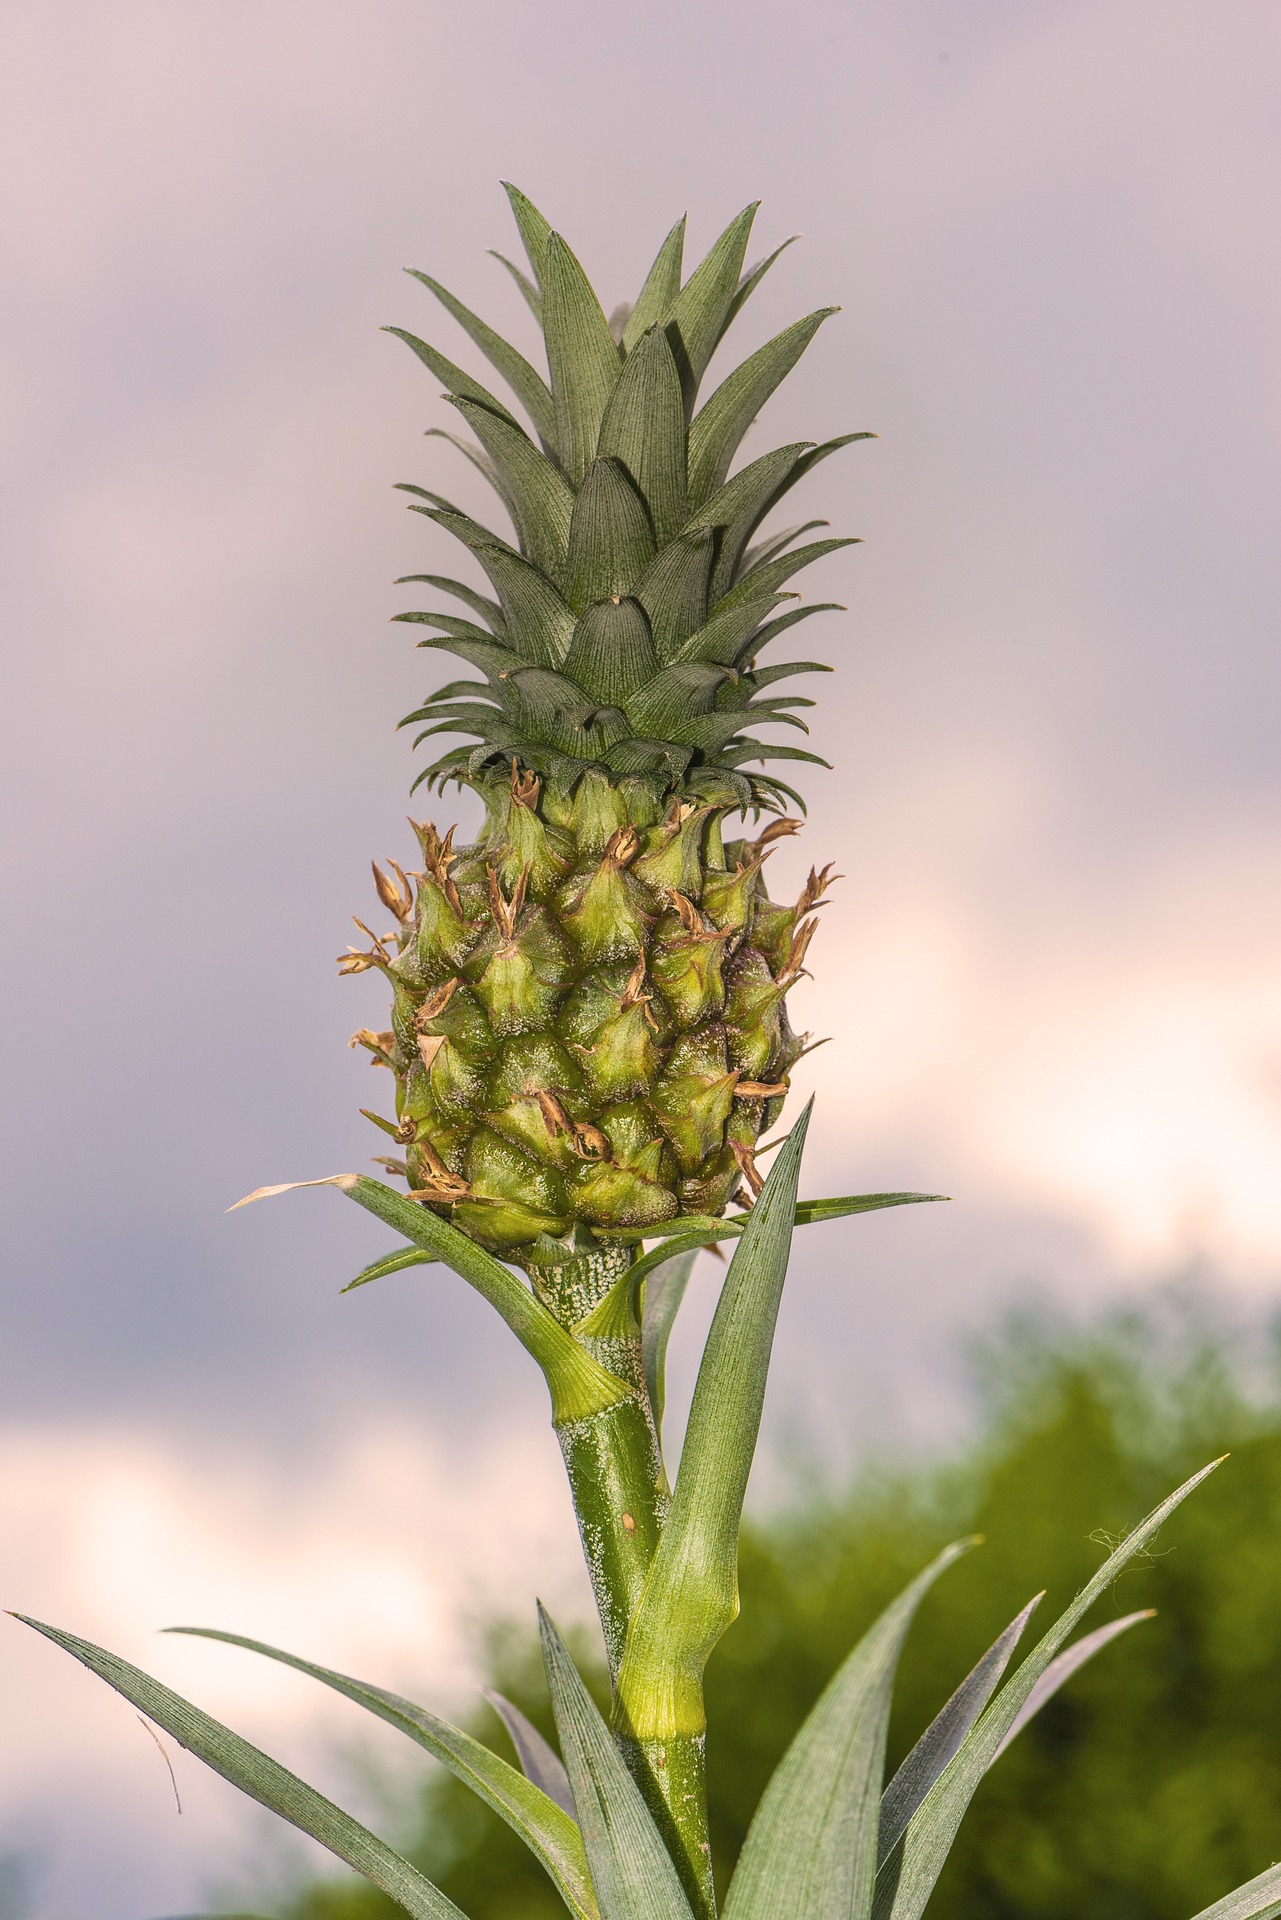 Pineapple Pixabay Public Domain